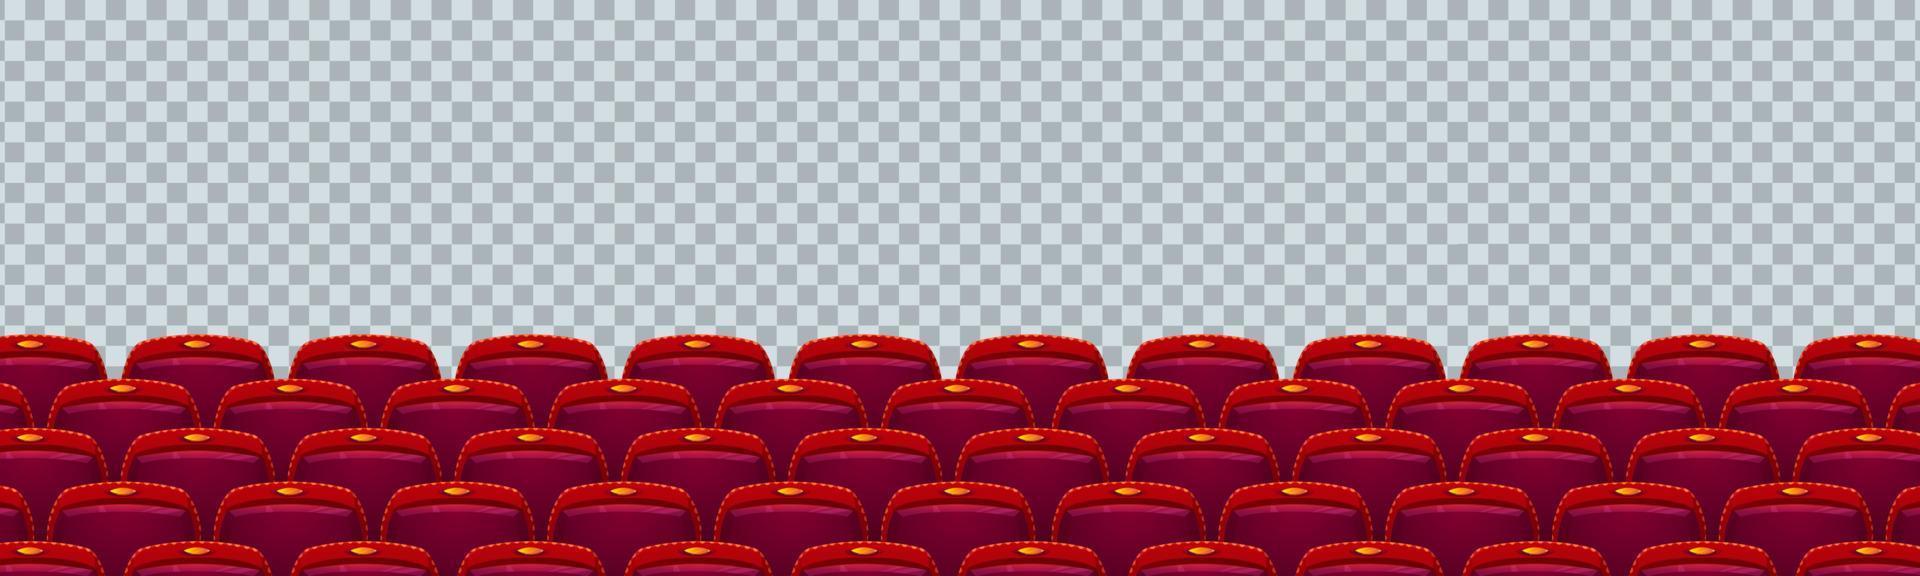 fileiras de assentos de cinema, cadeiras isoladas de cinema vetor